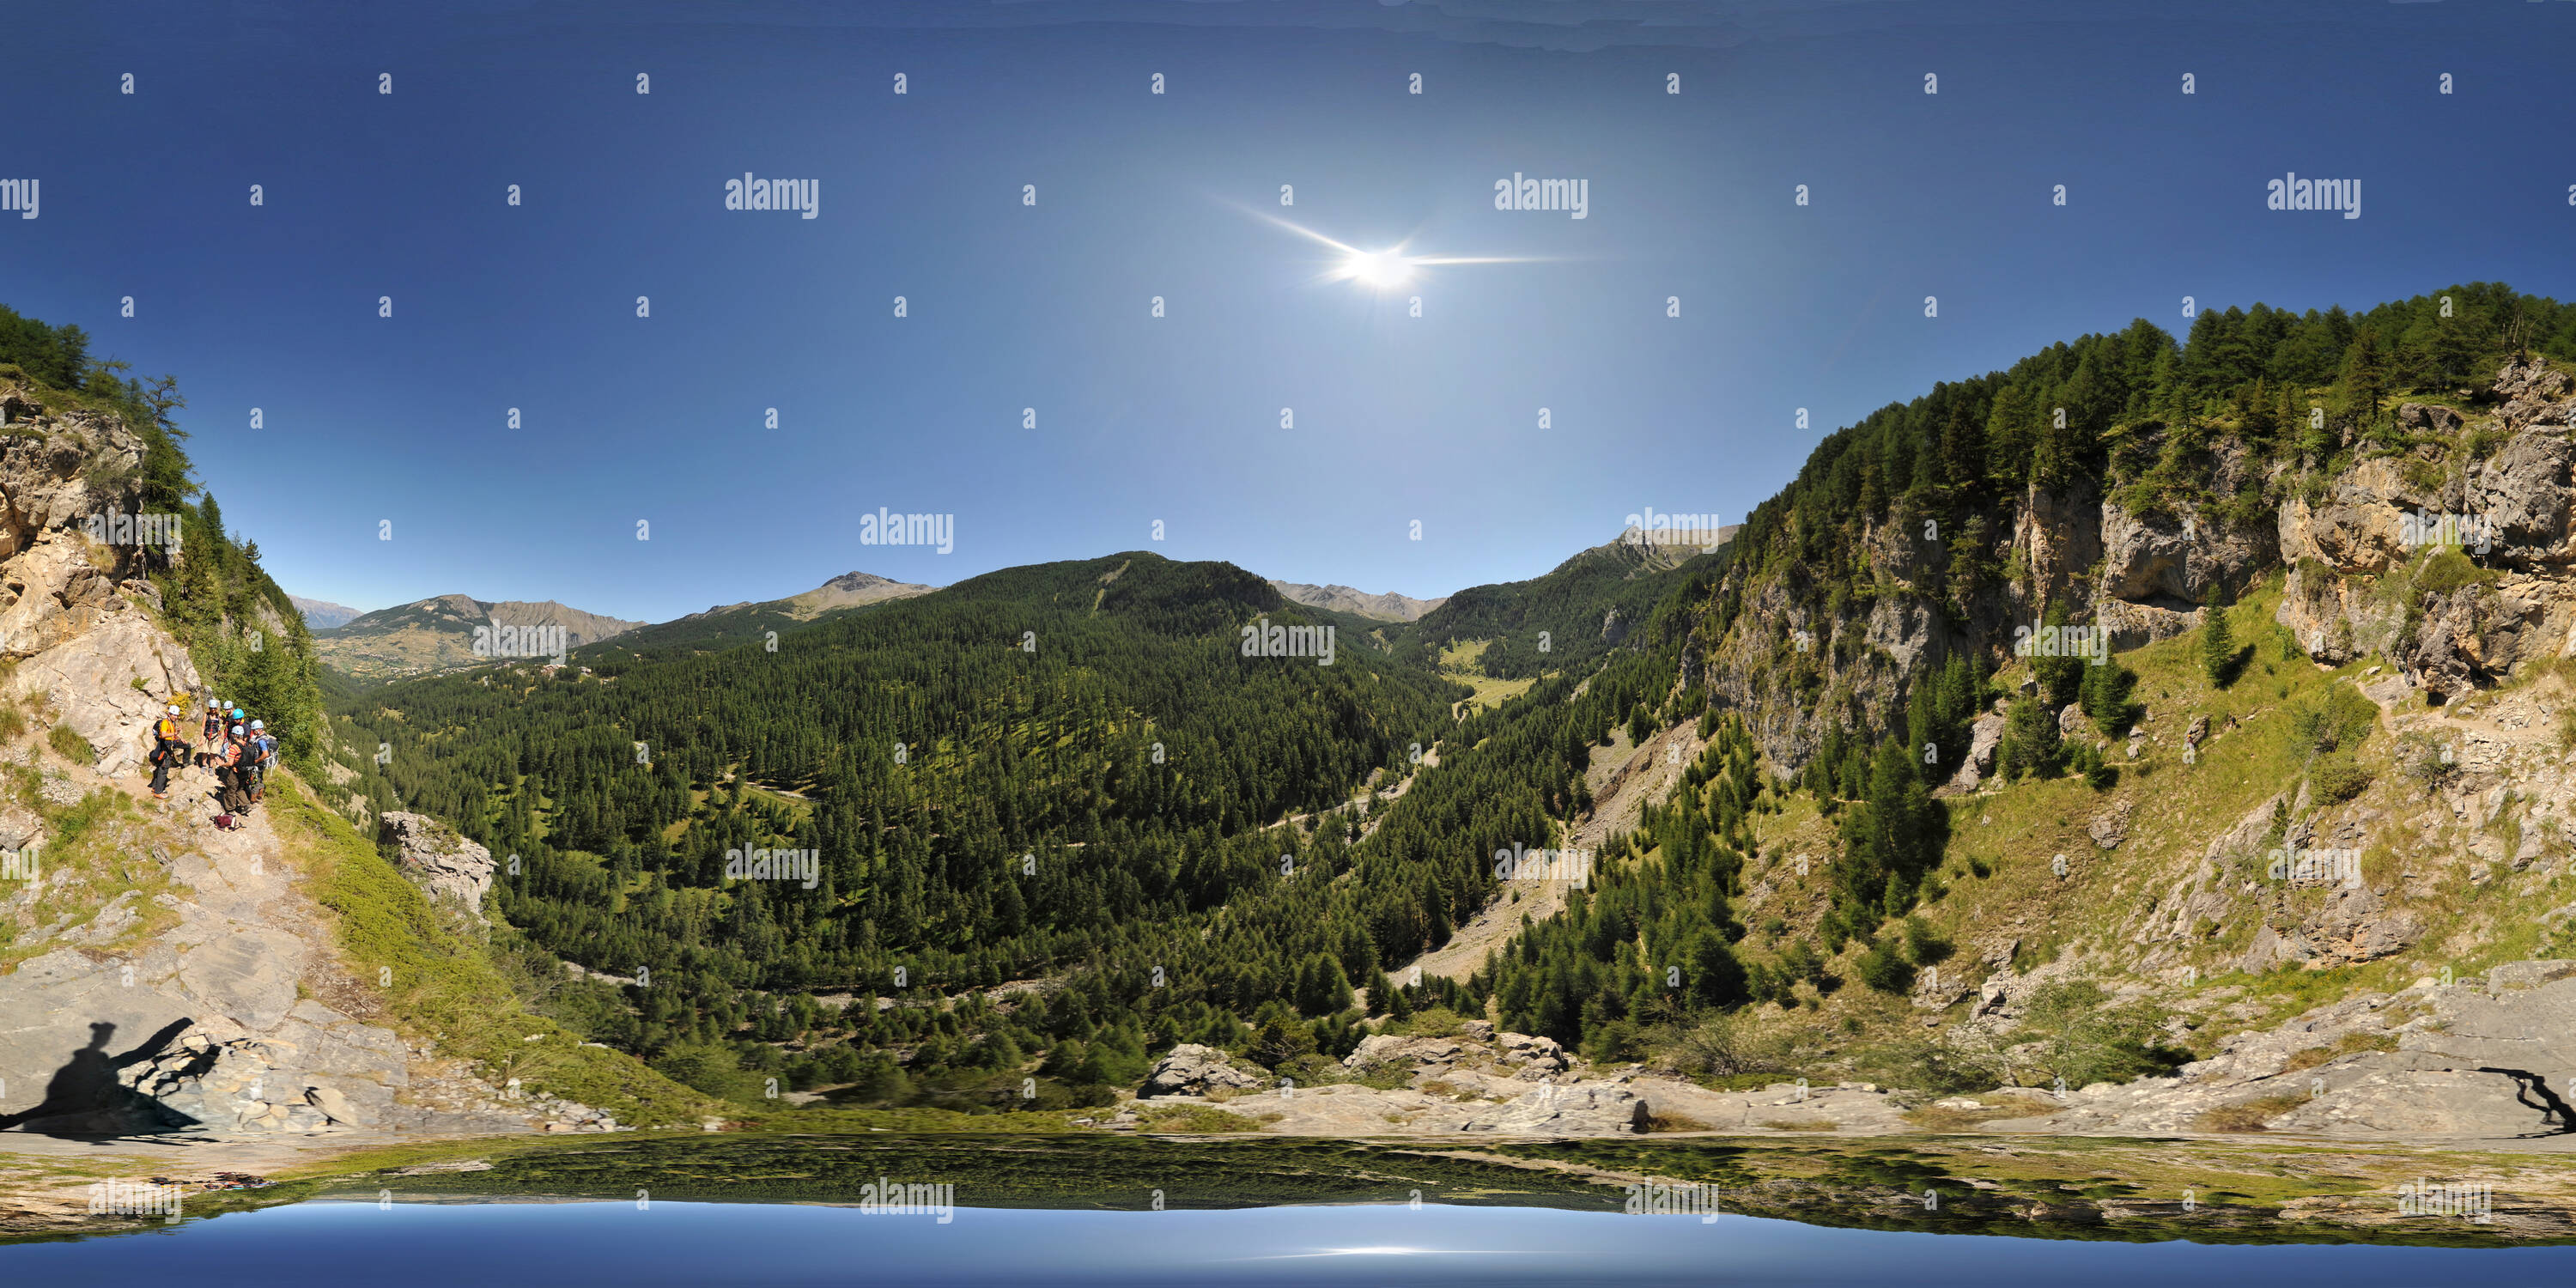 360 degree panoramic view of Via Ferrata site in Les Orres